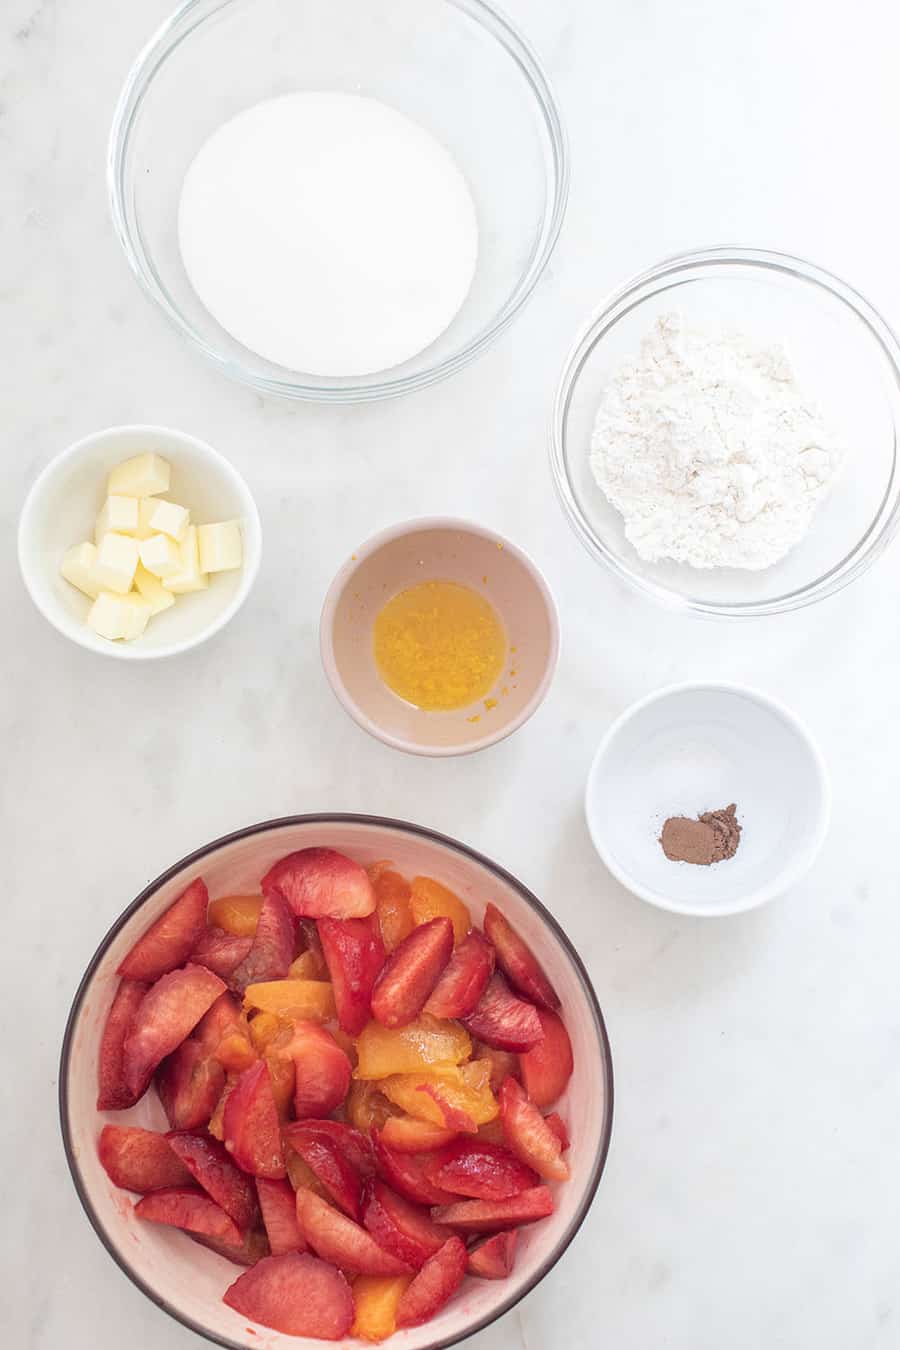 sugar, butter, orange, flour, slices and sliced fruit in a bowl.